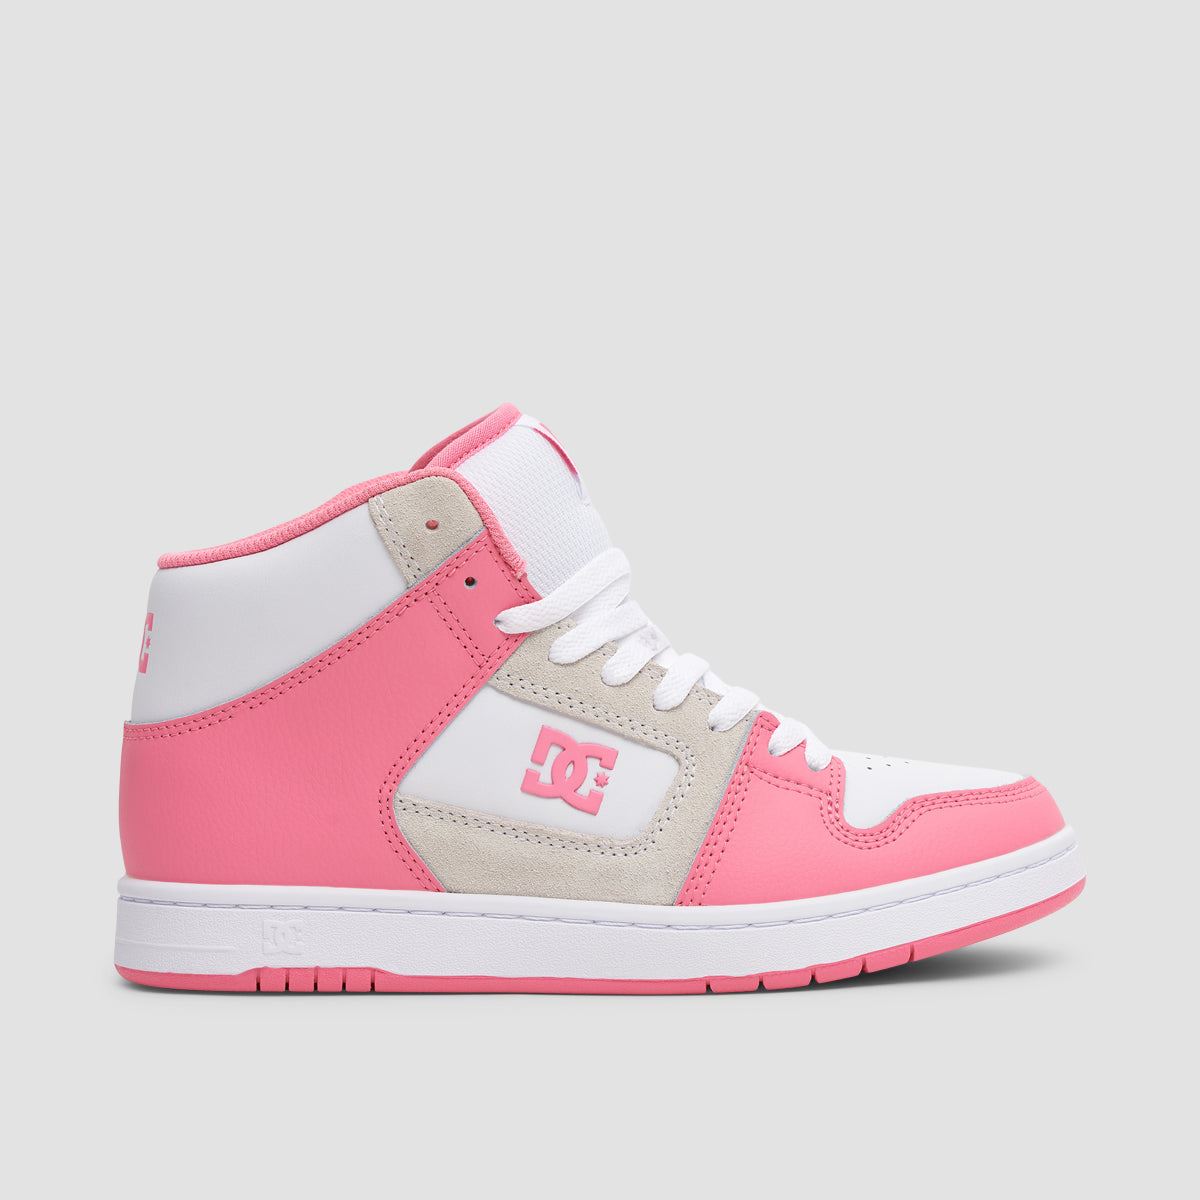 DC Manteca 4 Hi Shoes - Pink/White - Womens